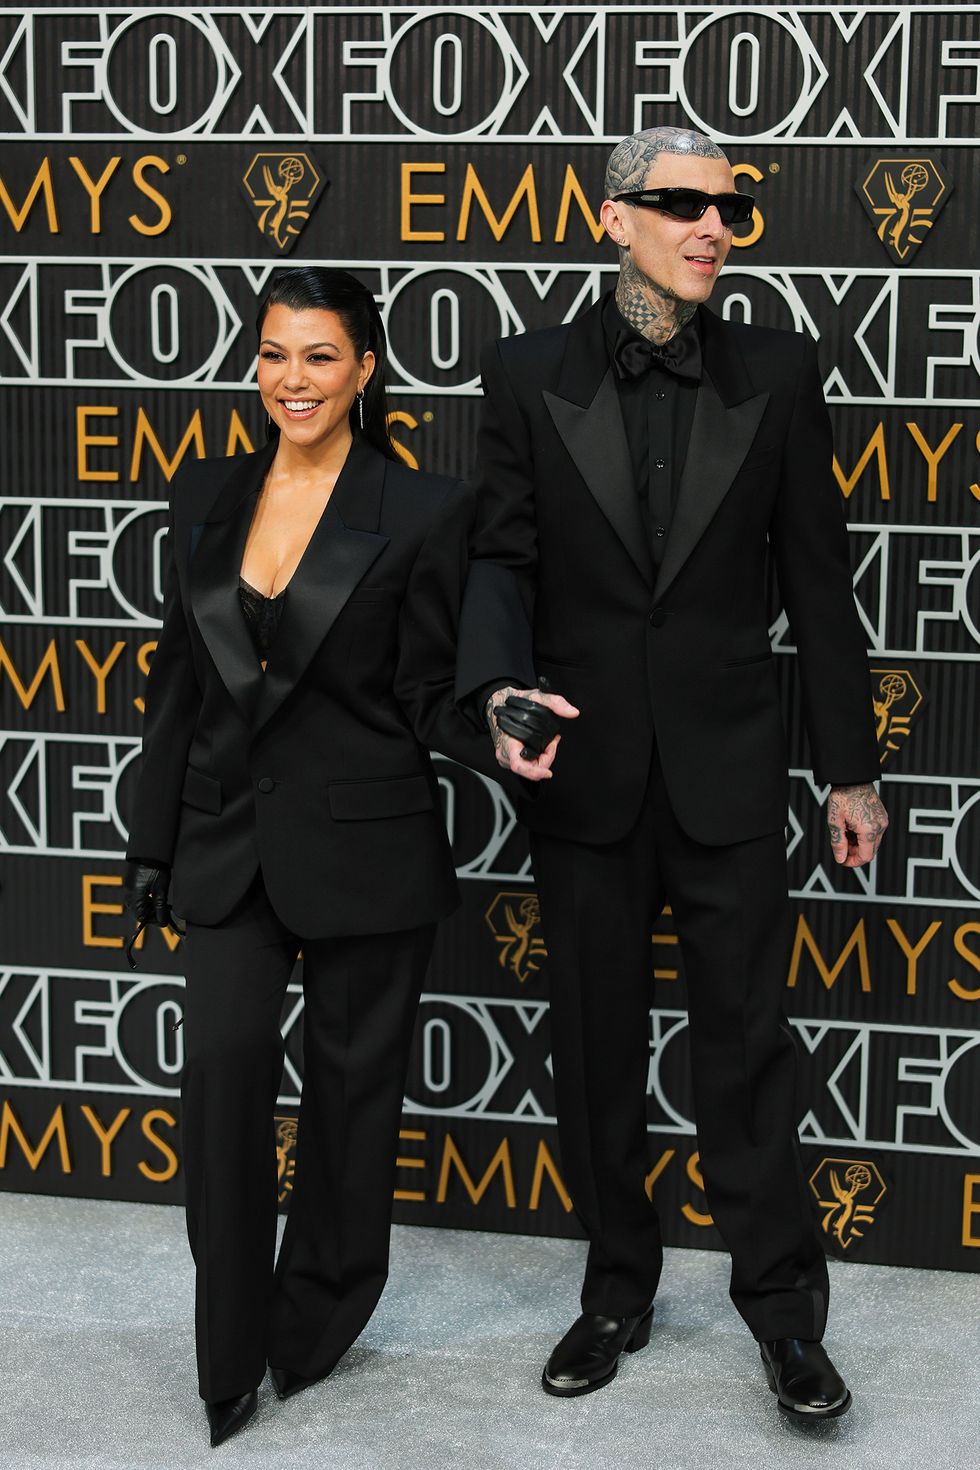 Kourtney Kardashian announces she is pregnant with Travis Barker at  Blink-182 concert - ABC News